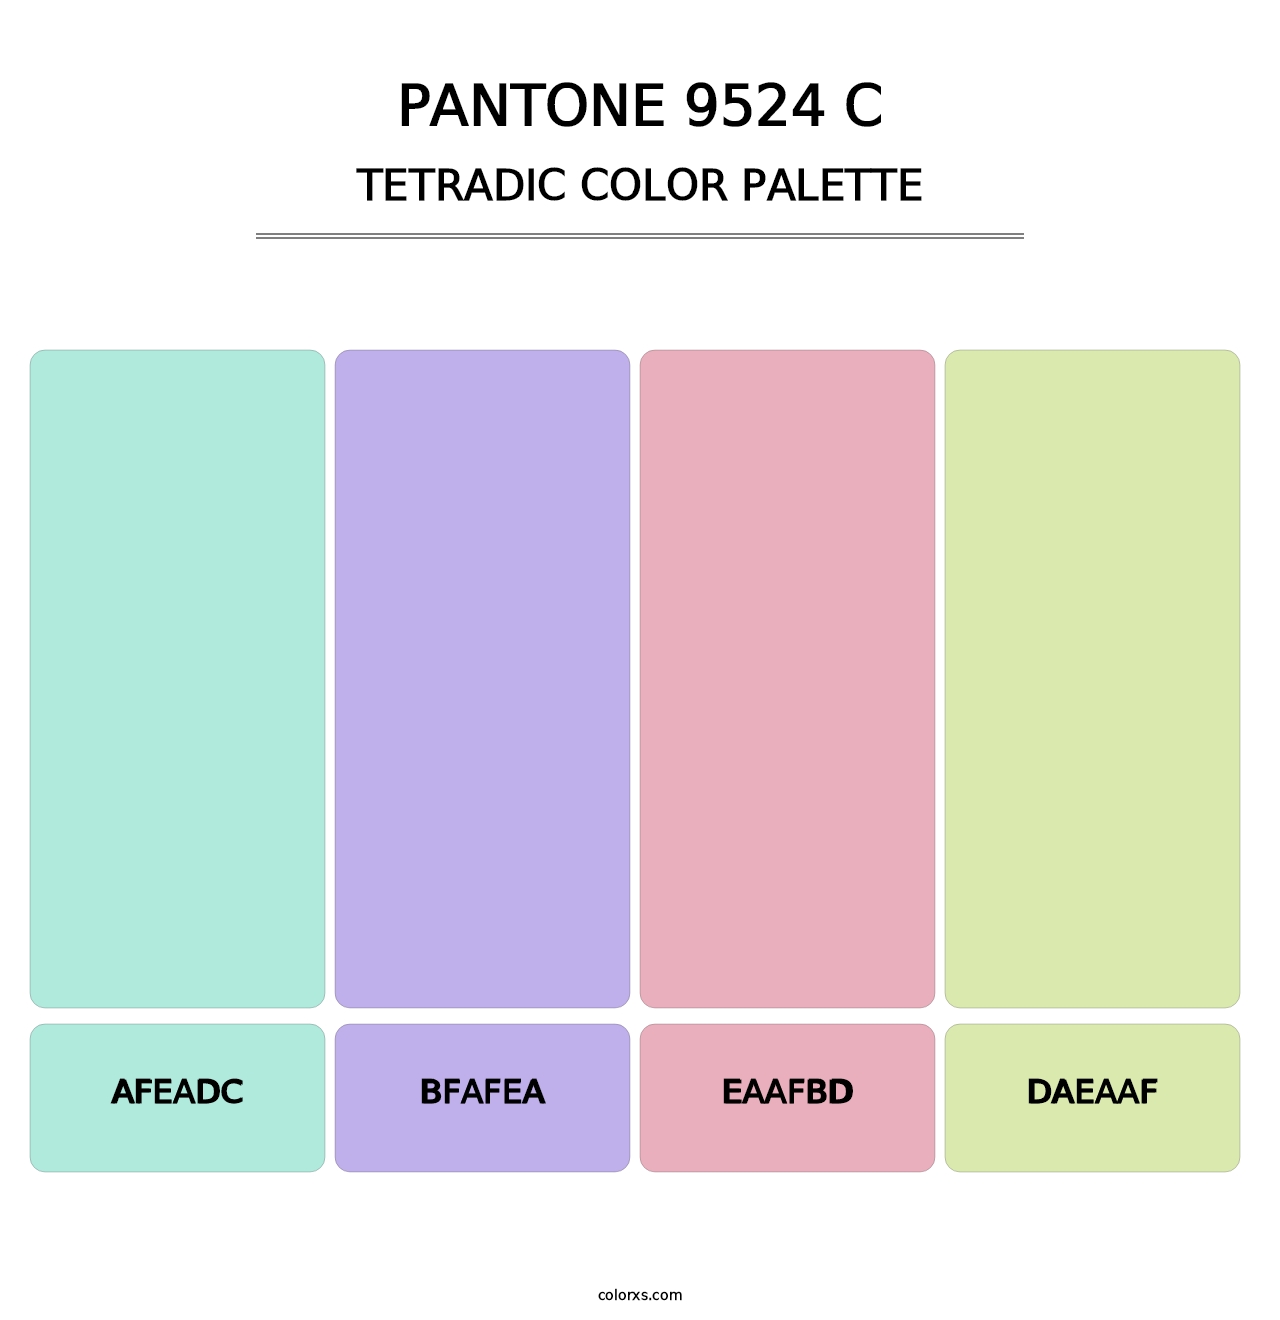 PANTONE 9524 C - Tetradic Color Palette